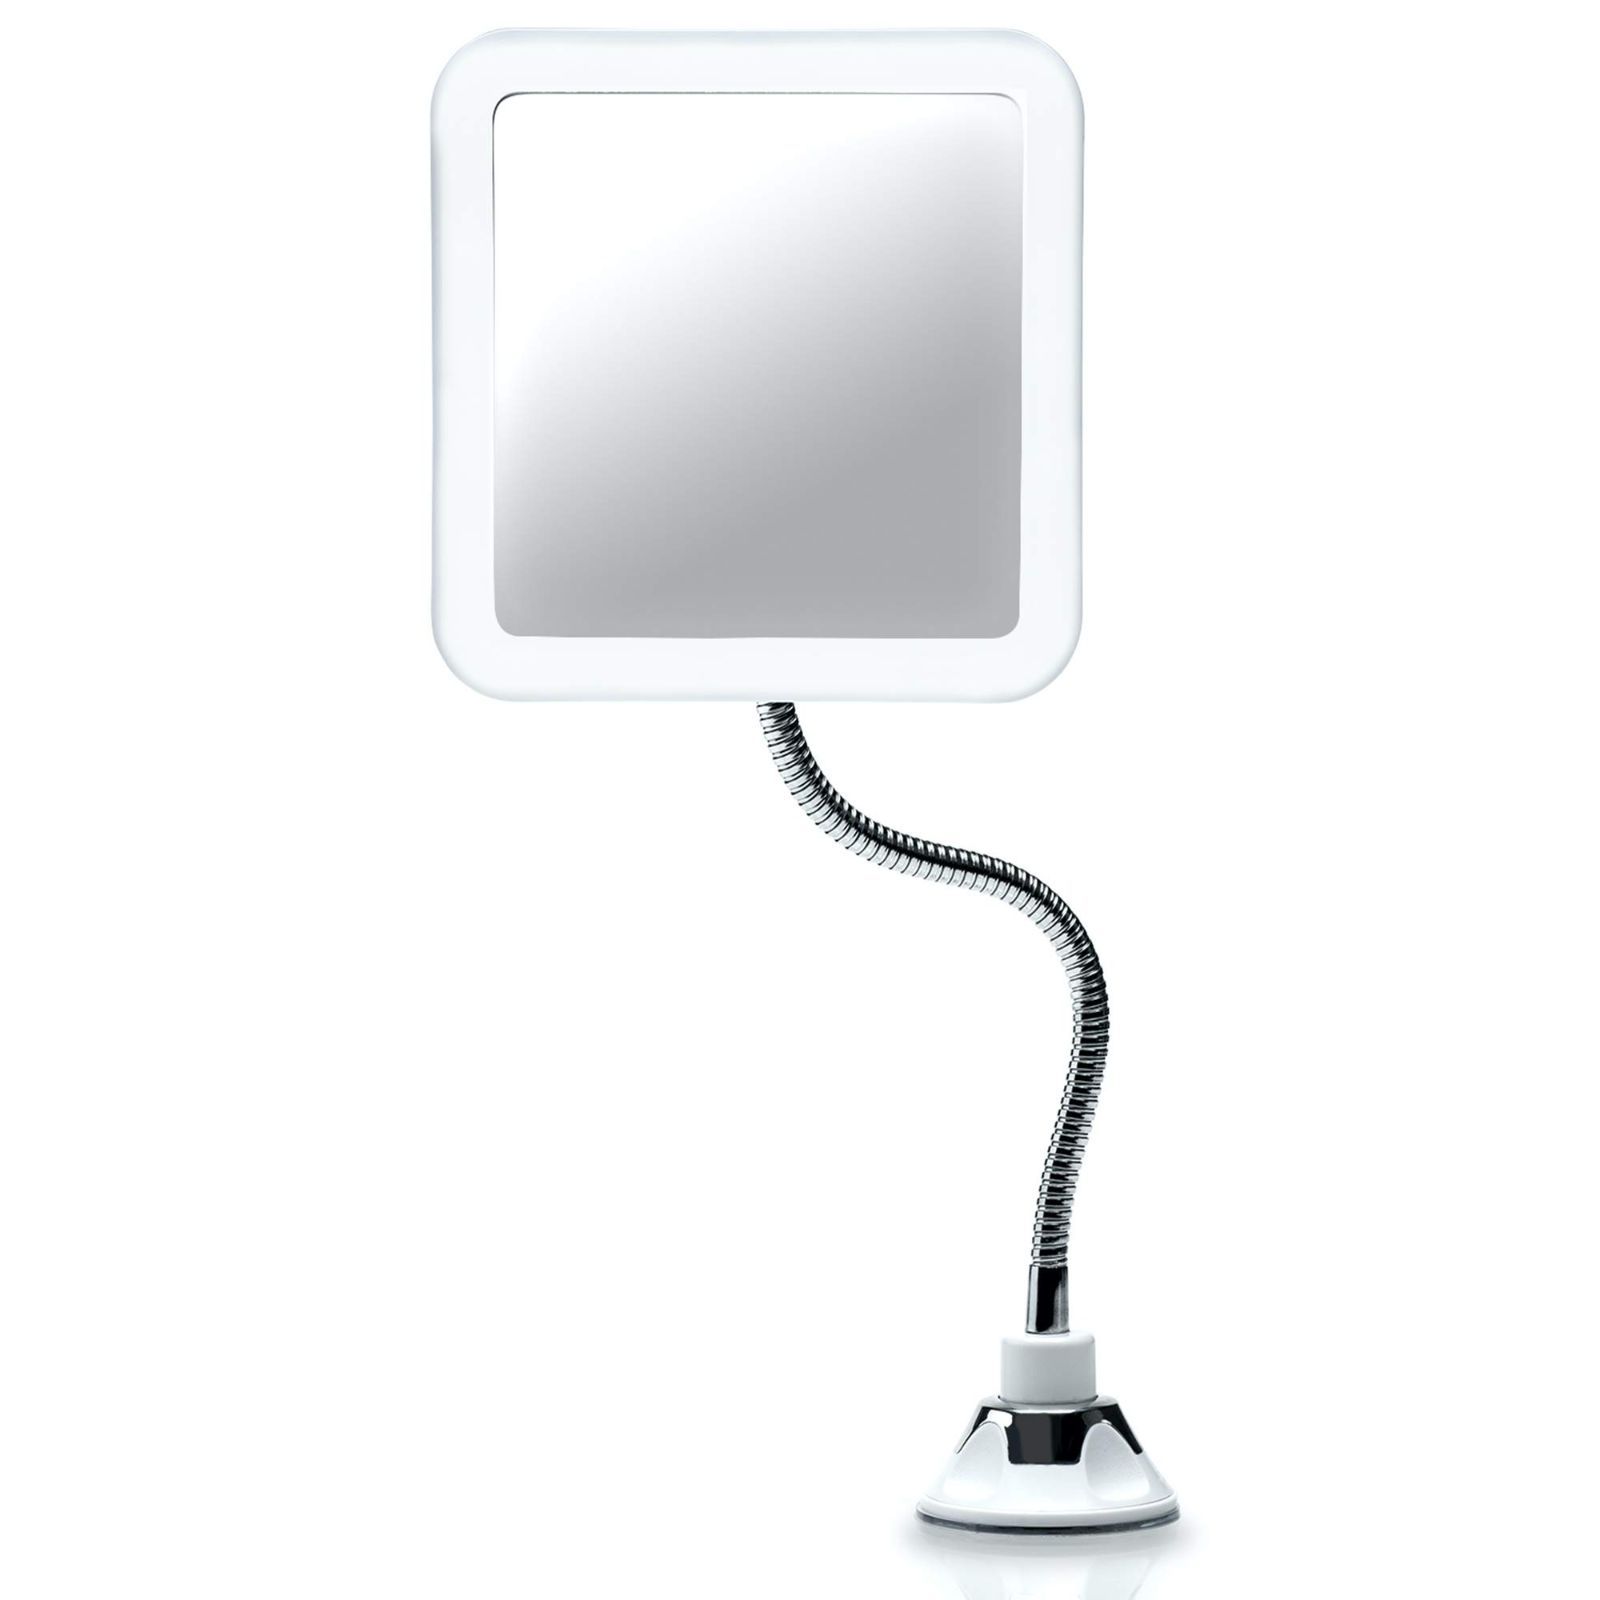 Fancii 10倍拡大鏡 LED化粧ミラー 鏡 調光可能な自然光 吸盤ロック付キット/セット